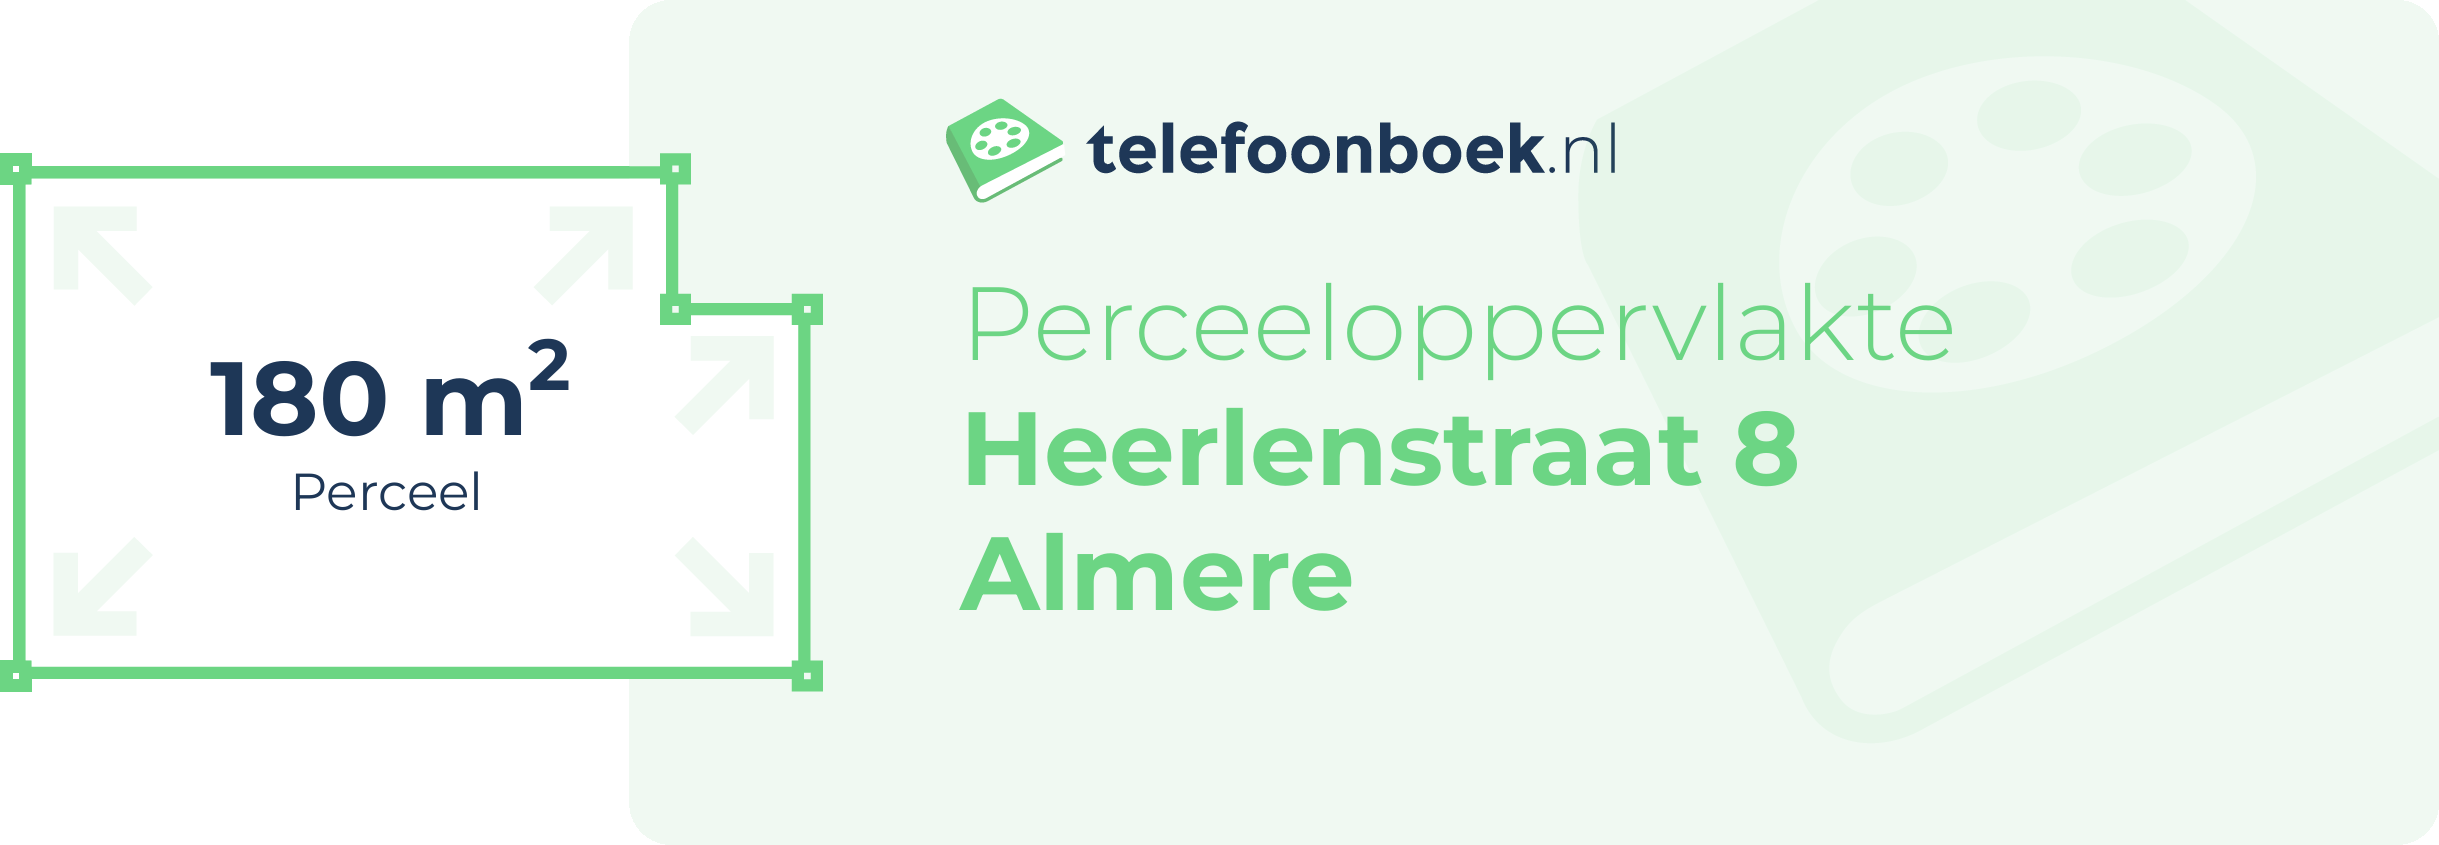 Perceeloppervlakte Heerlenstraat 8 Almere